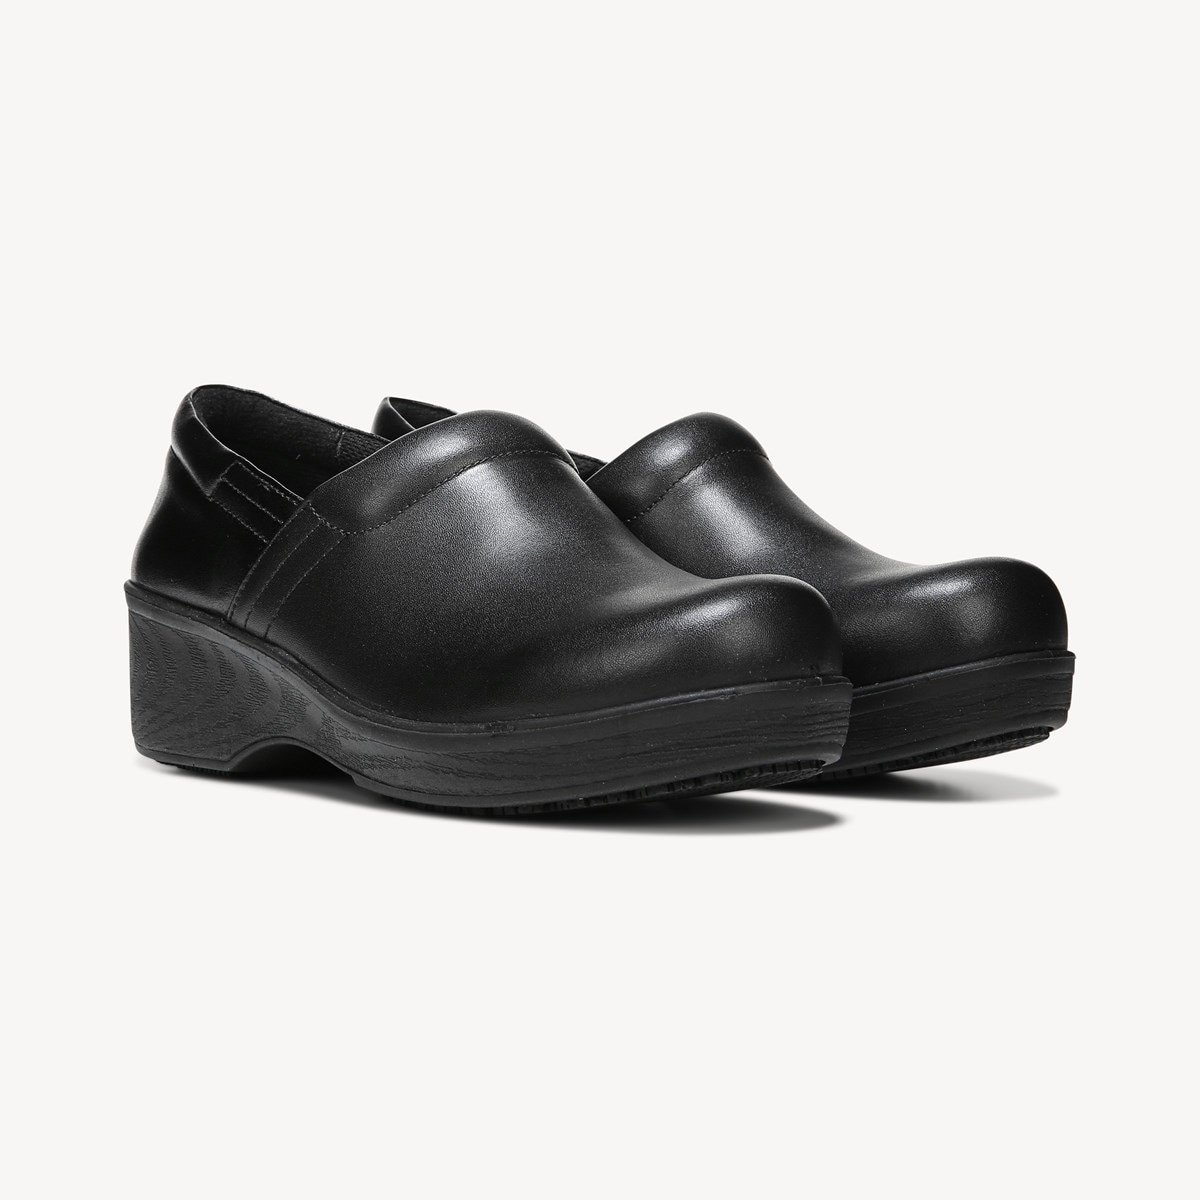 dr scholl's work women's shoes